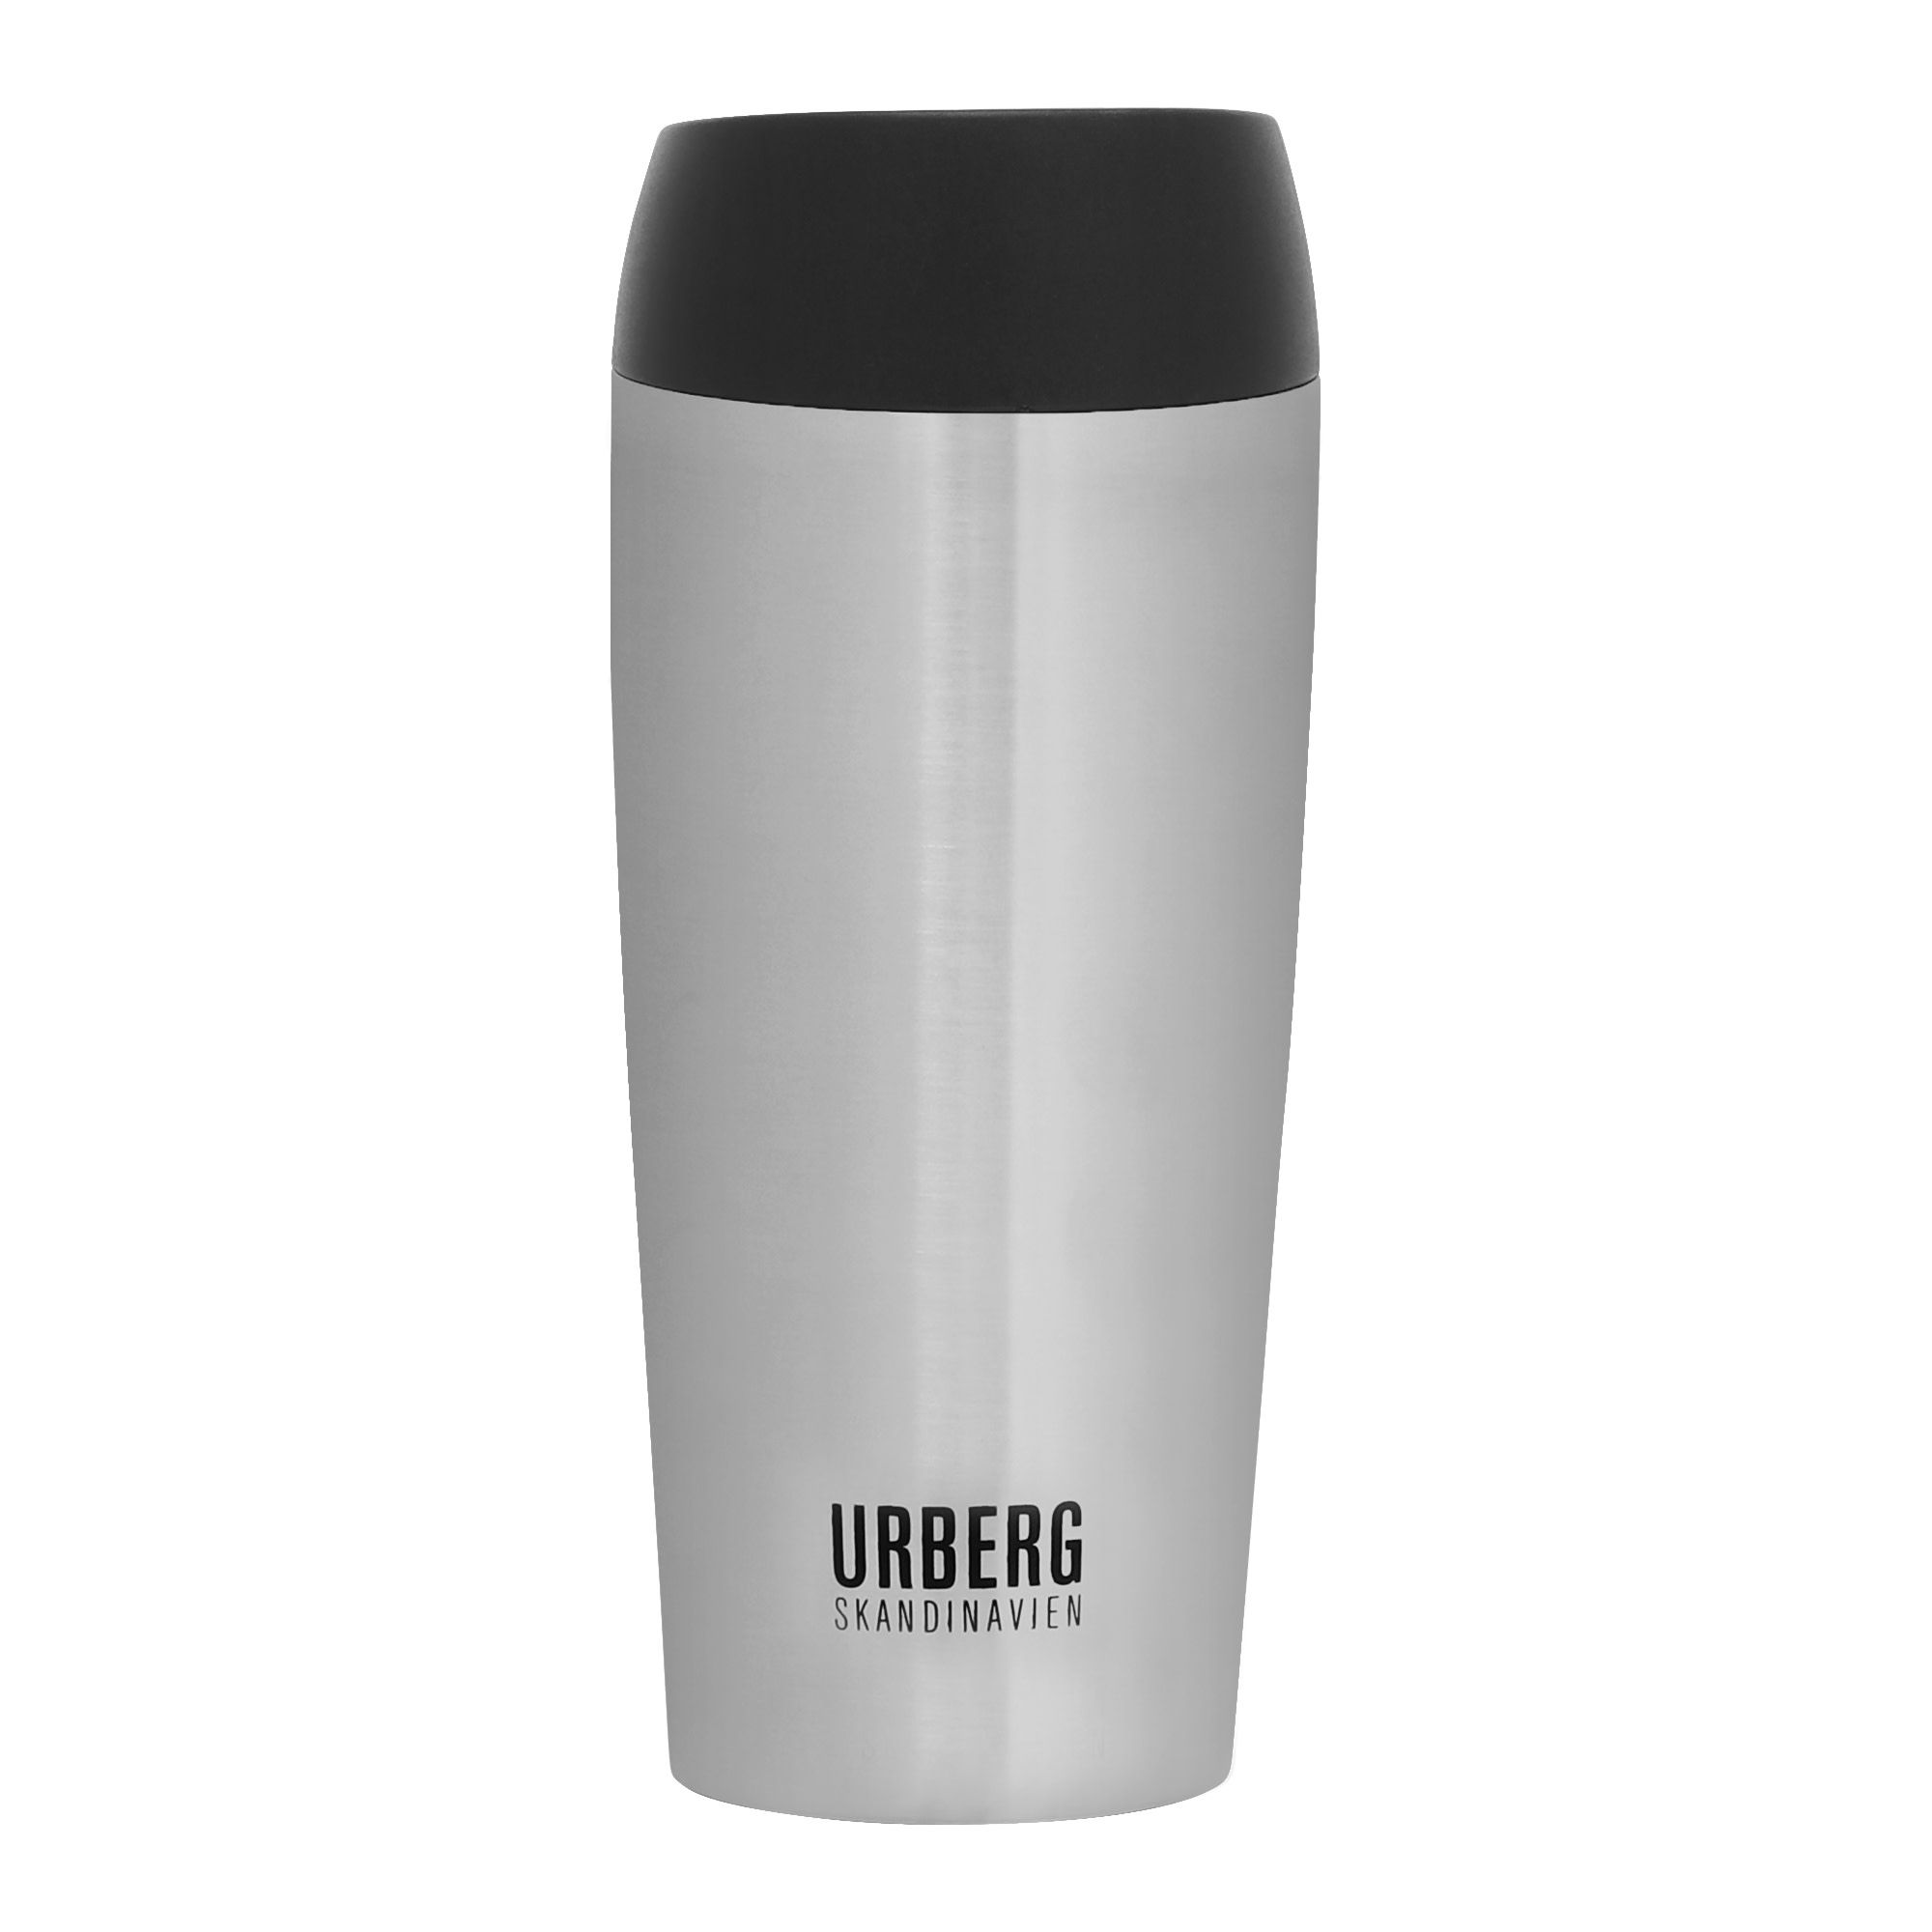 https://www.fjellsport.no/assets/blobs/urberg-vacuum-mug-400-ml-stainless-b23bf91a88.jpeg?preset=medium&dpr=2